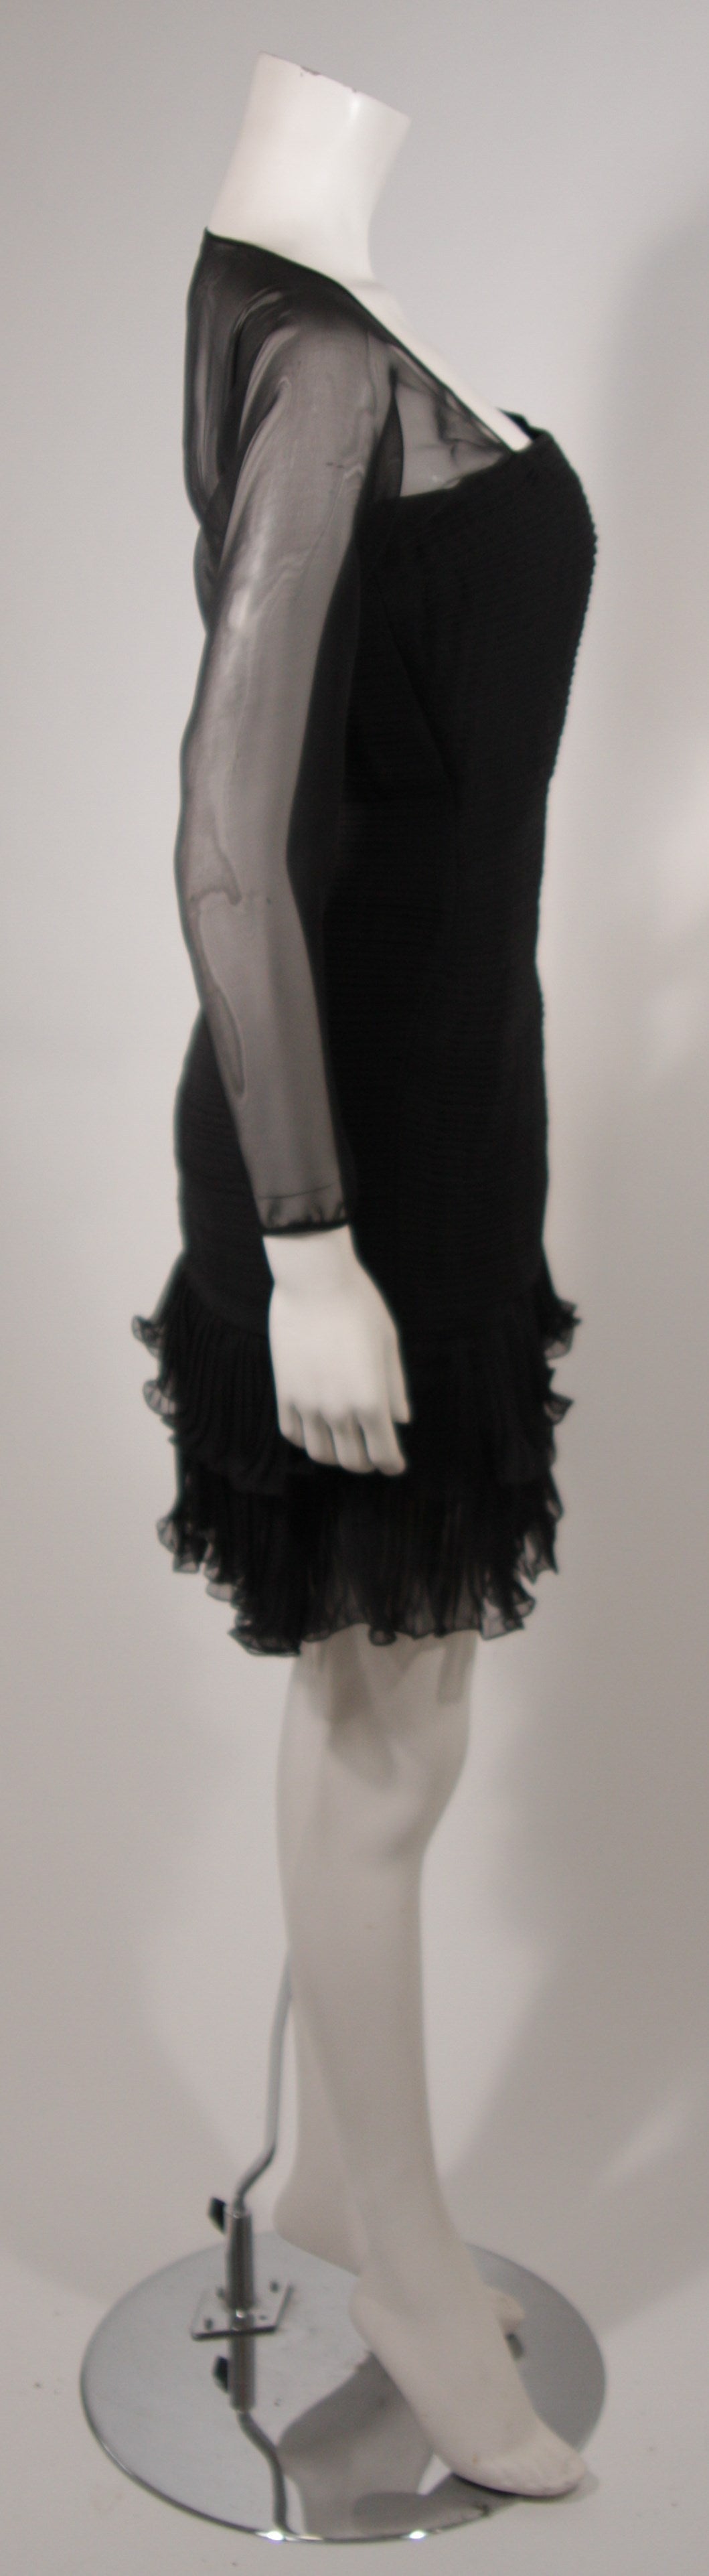 Oscar De La Renta Black Silk Chiffon Cocktail Dress Size 10 In Excellent Condition For Sale In Los Angeles, CA